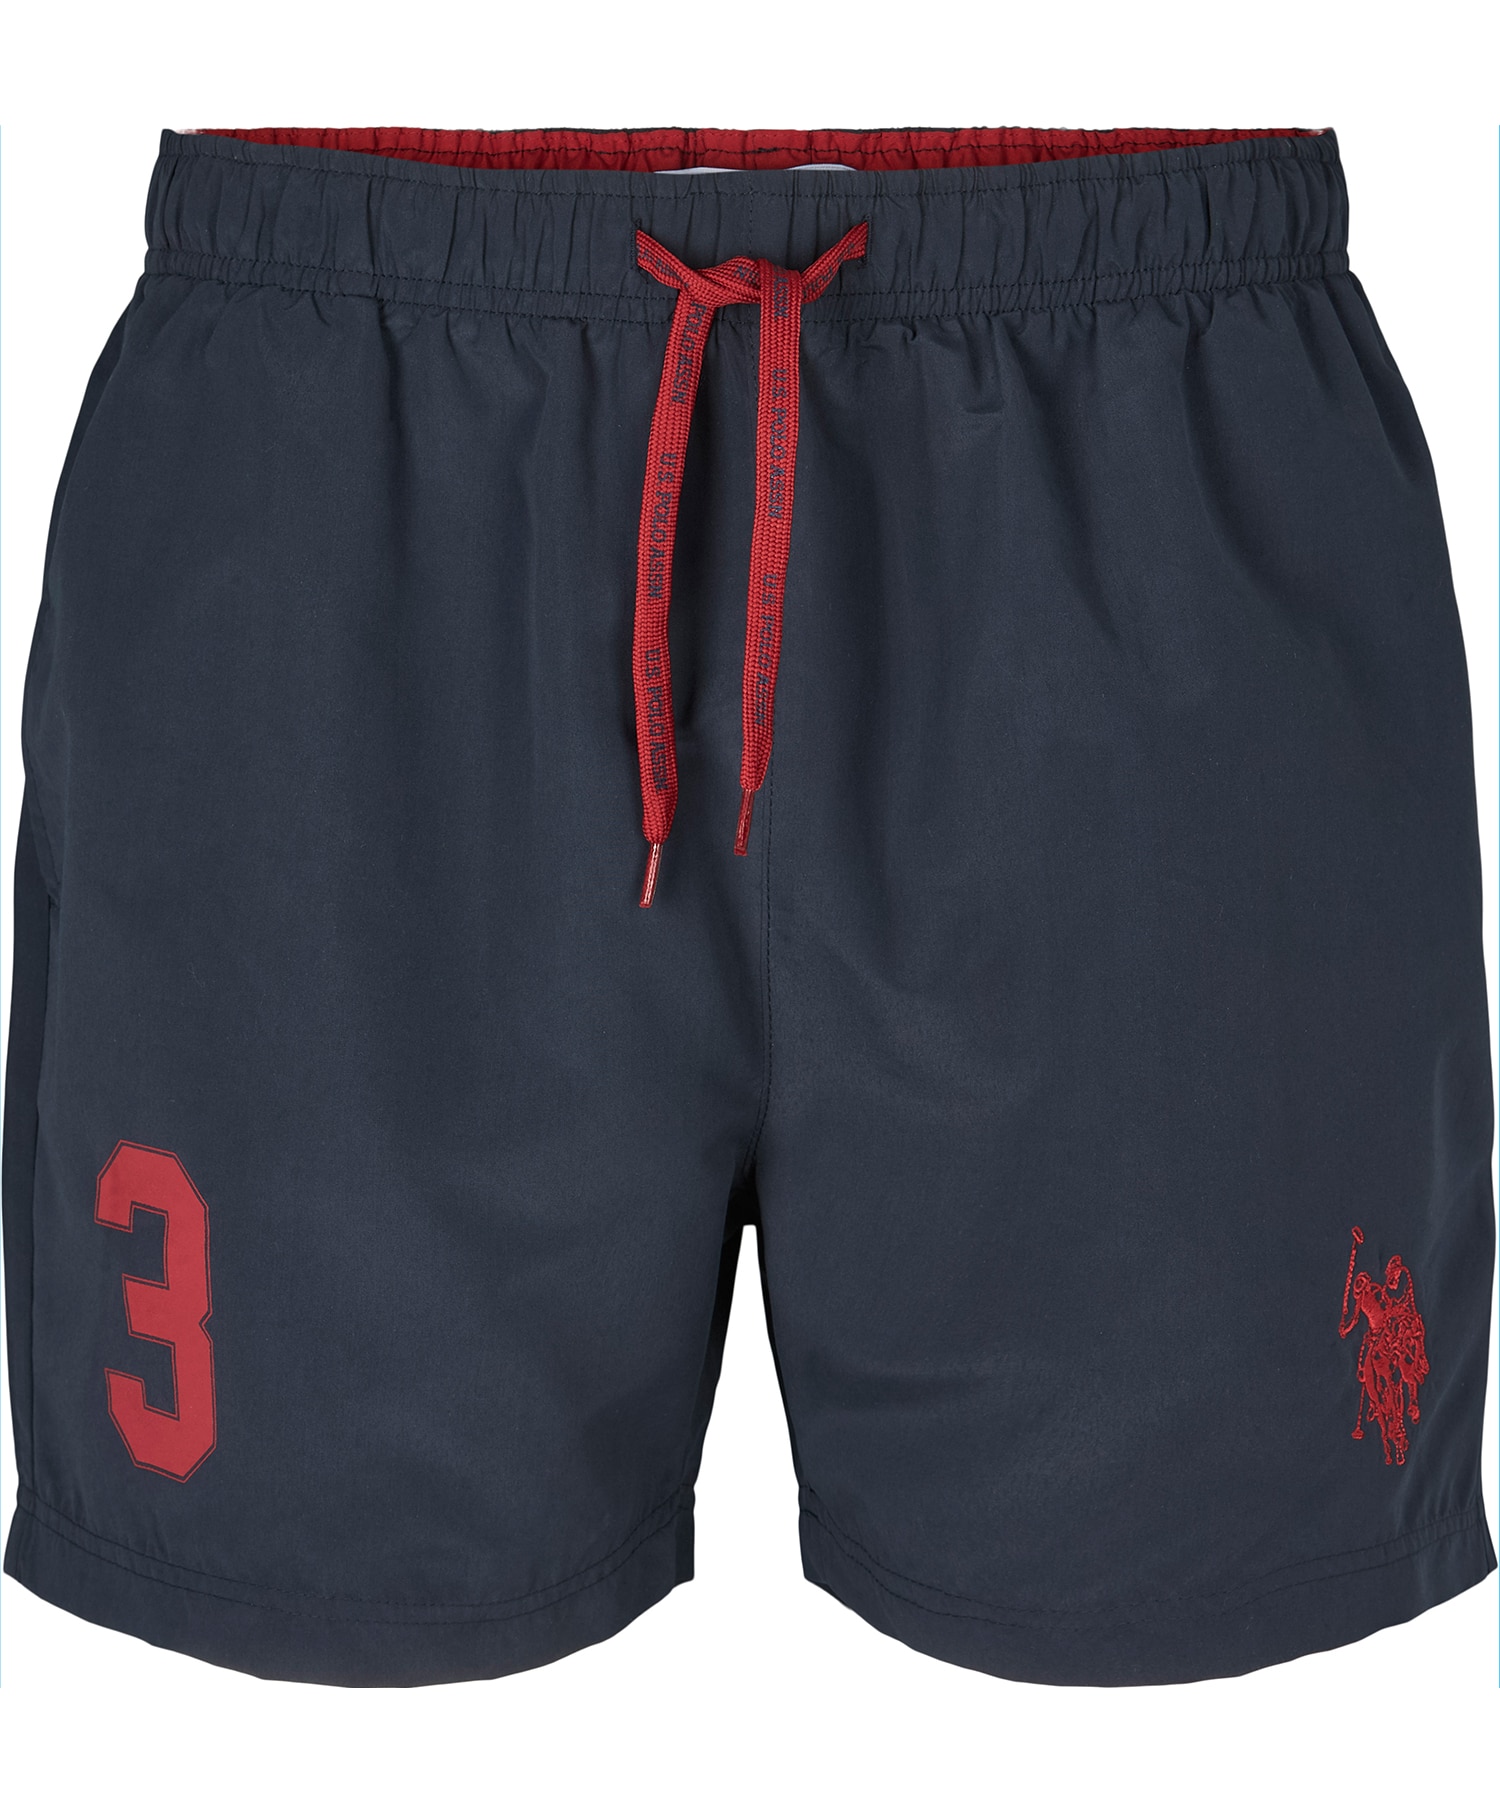 U.S.Polo Alexander shorts